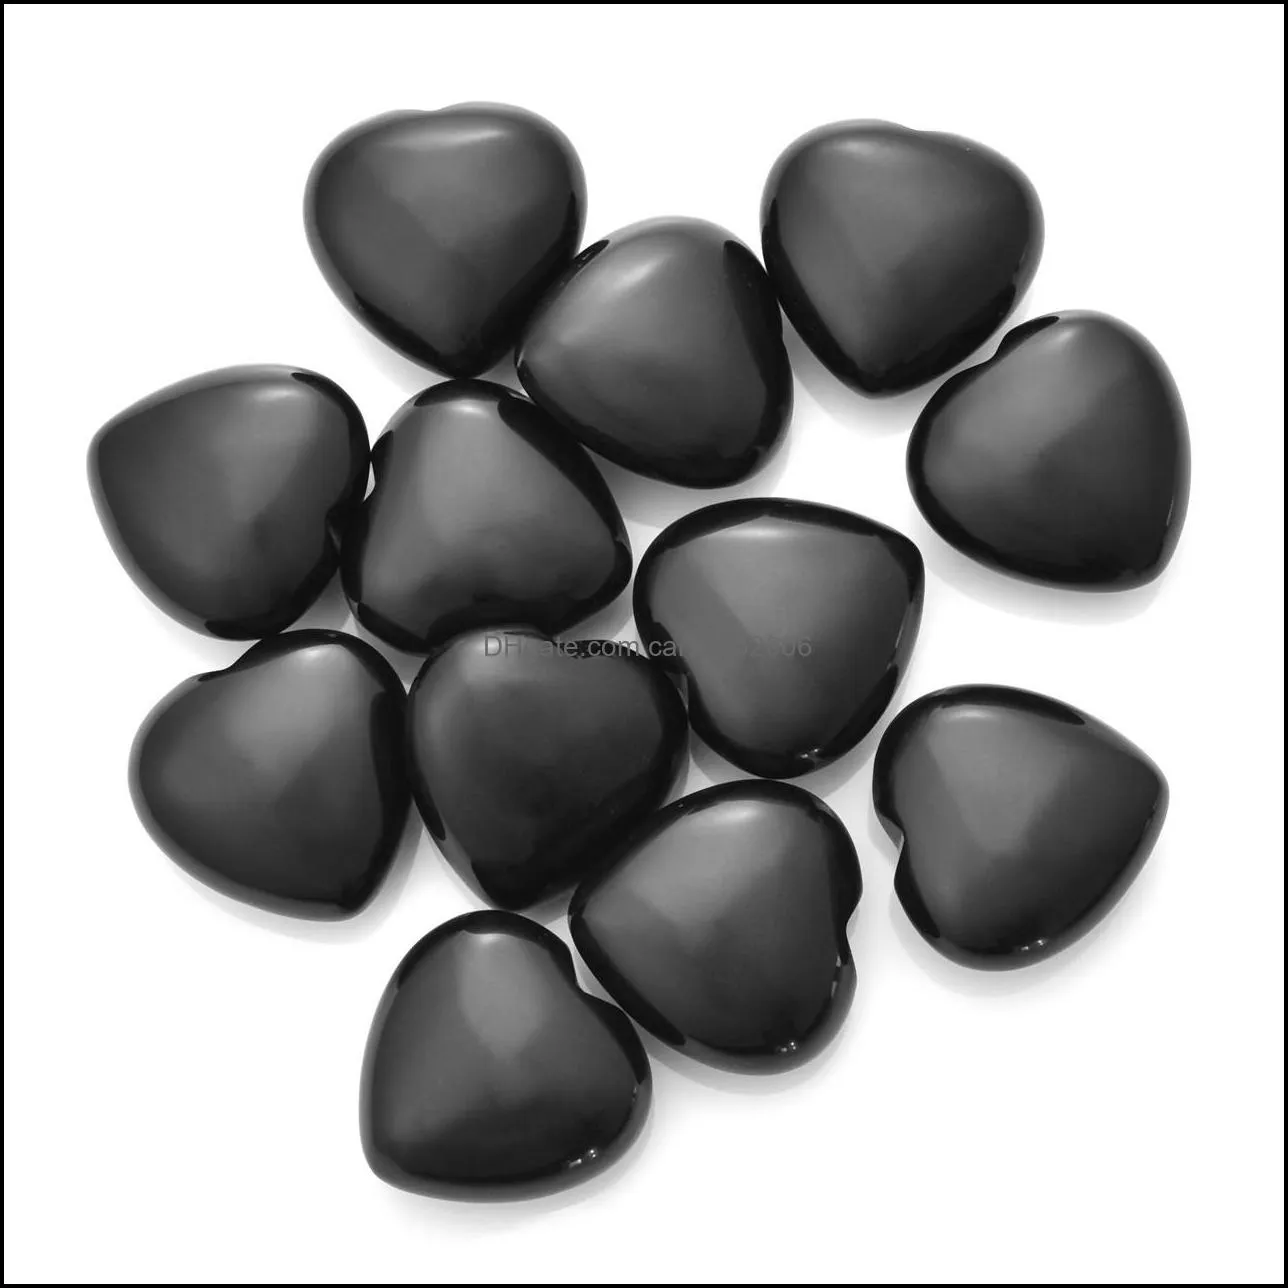 natural black obsidian stone ornaments carved 25x10mm heart chakra reiki healing quartz mineral tumbled gemstones hand home decor